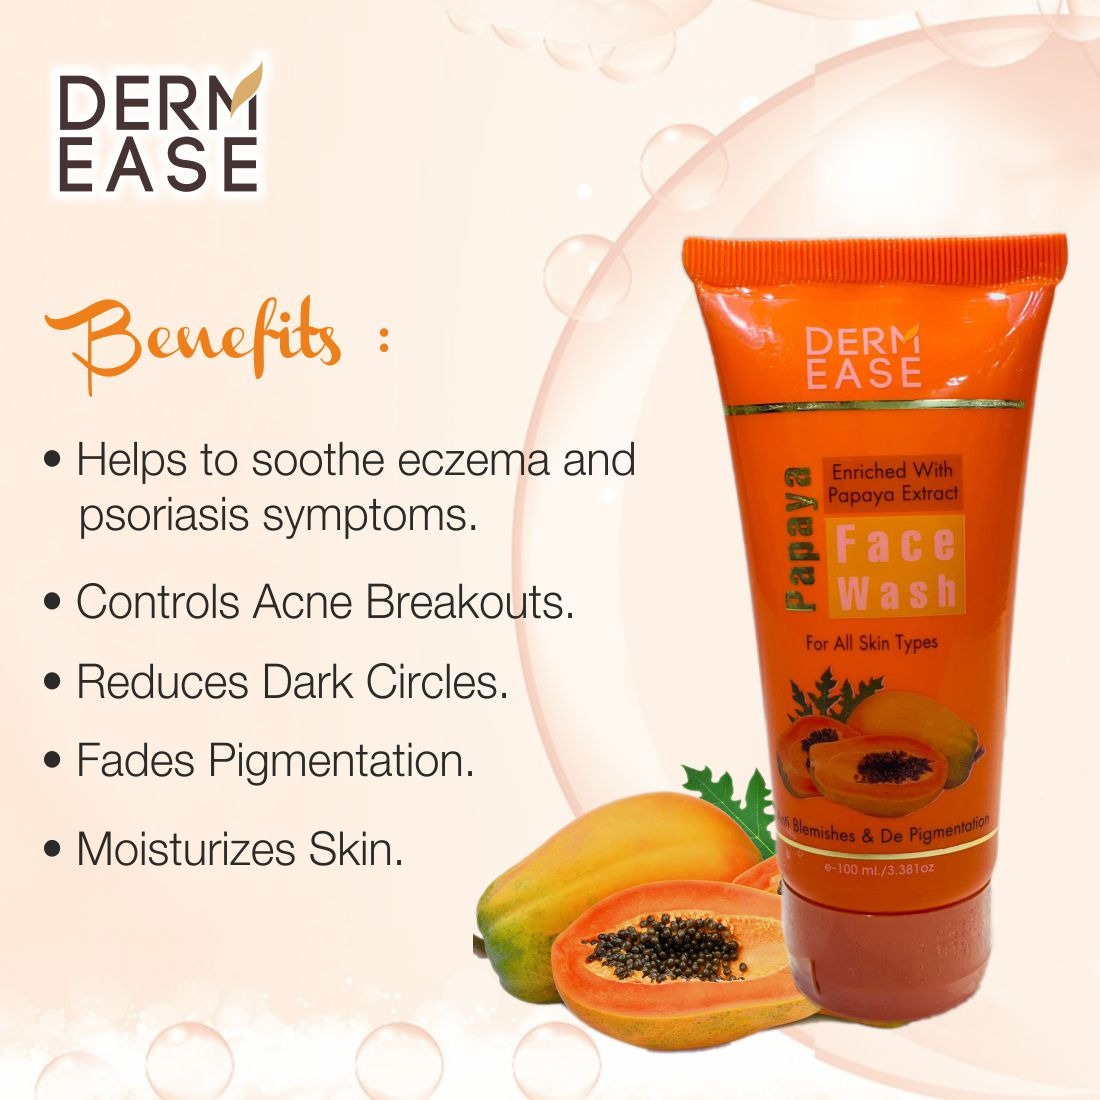 DERM EASE Papaya & Strawberry Face Wash Combo